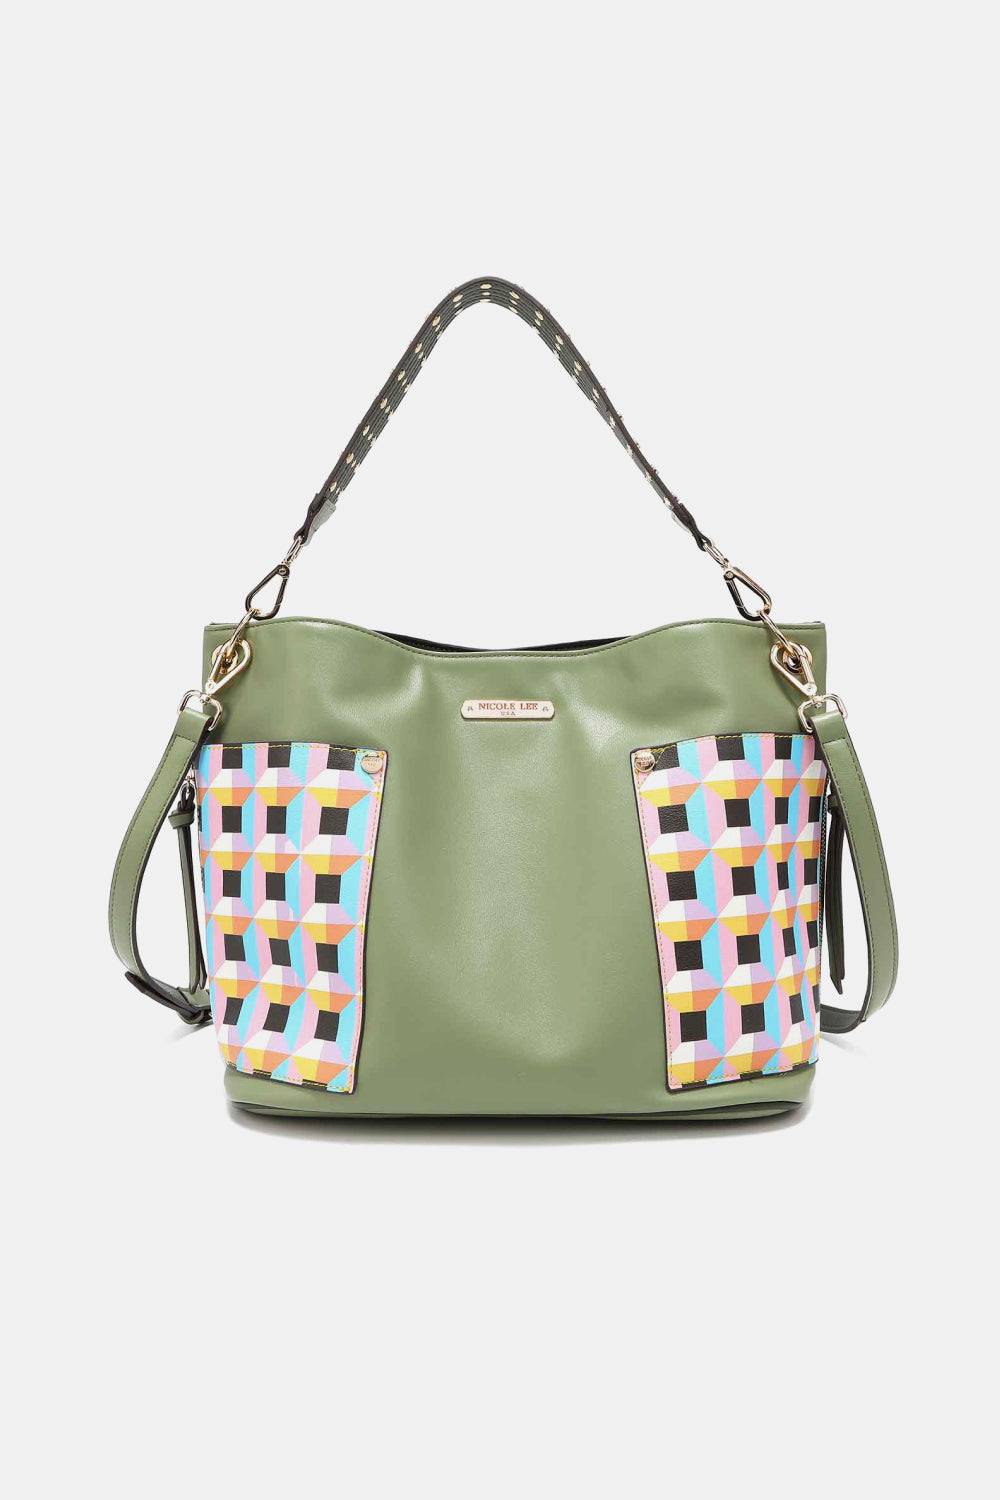 Nicole Lee USA Quihn 3-Piece Handbag Set Multi Style